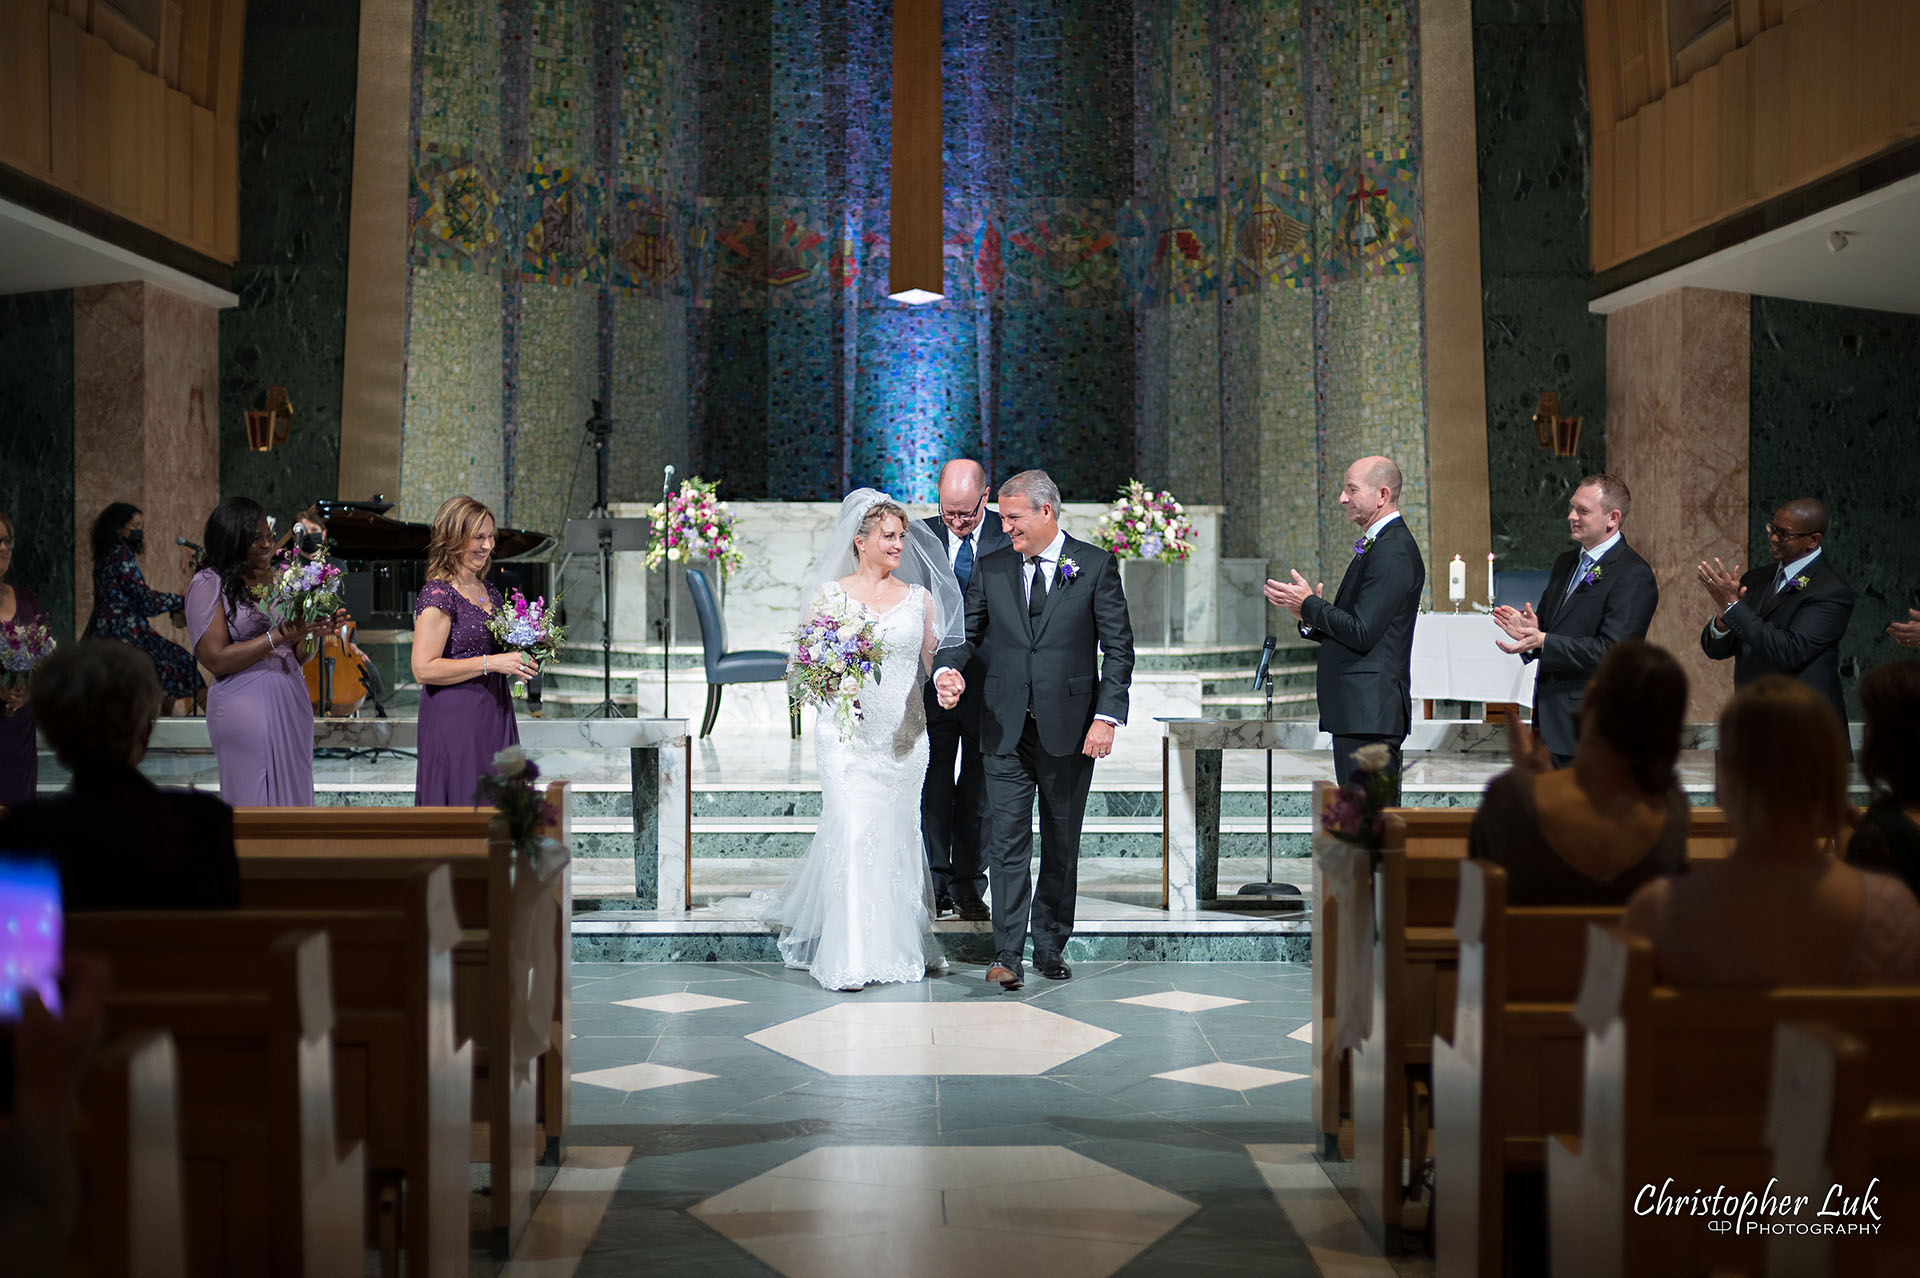 Christopher Luk Toronto Wedding Photographer Natural Candid Photojournalistic Tyndale Chapel Church Ceremony Bride Groom Celebrate Celebration Recessional  